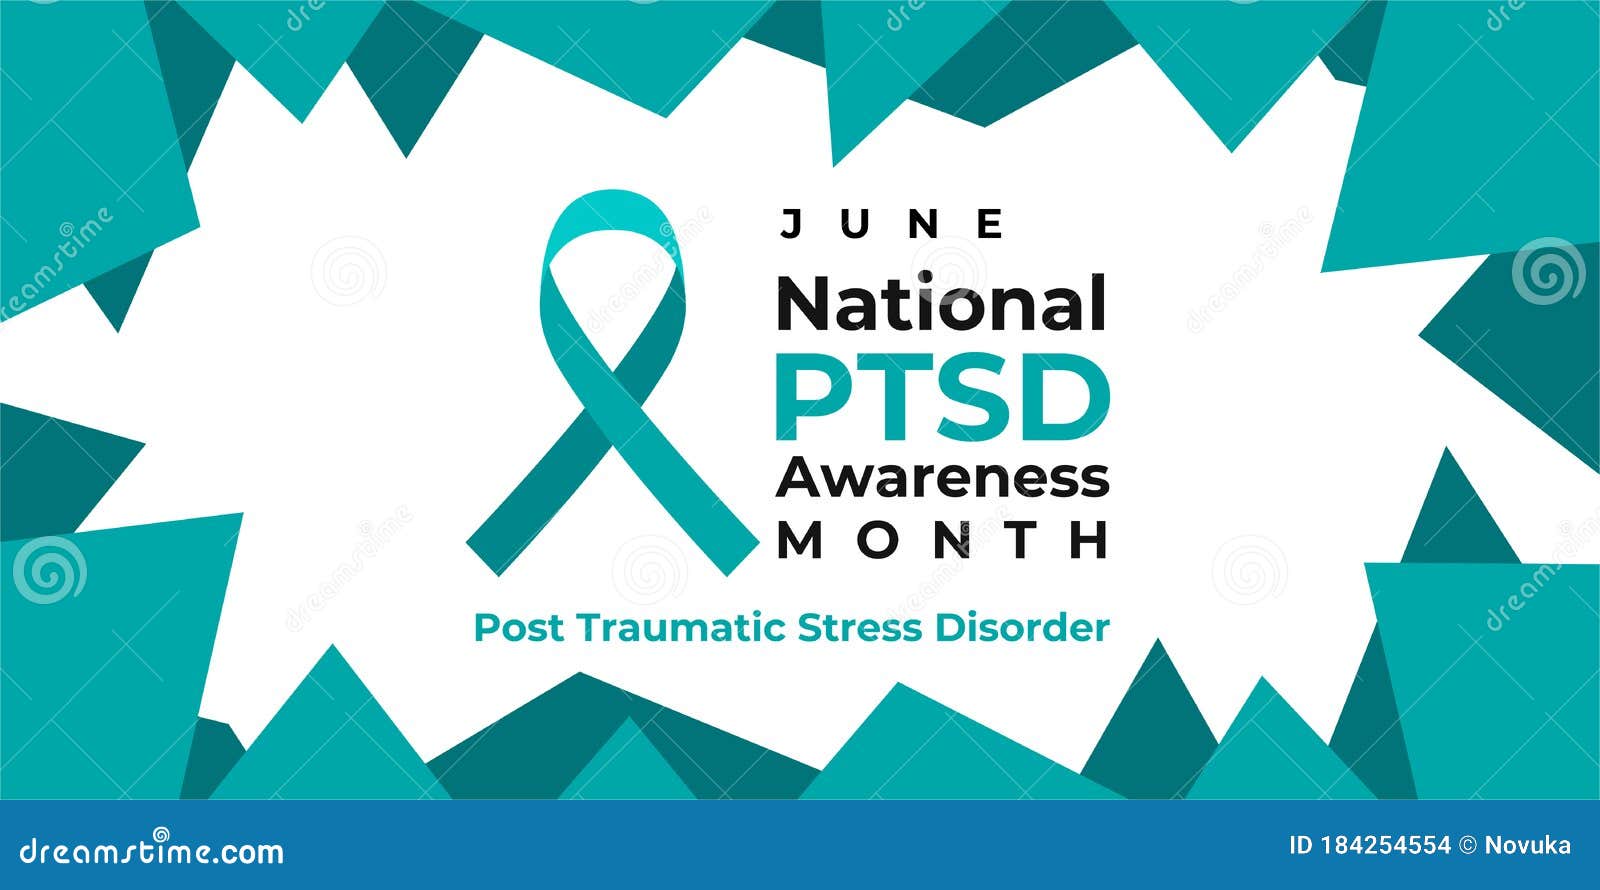 PTSD Awareness Month. Post Traumatic Stress Disorder. Vector ...